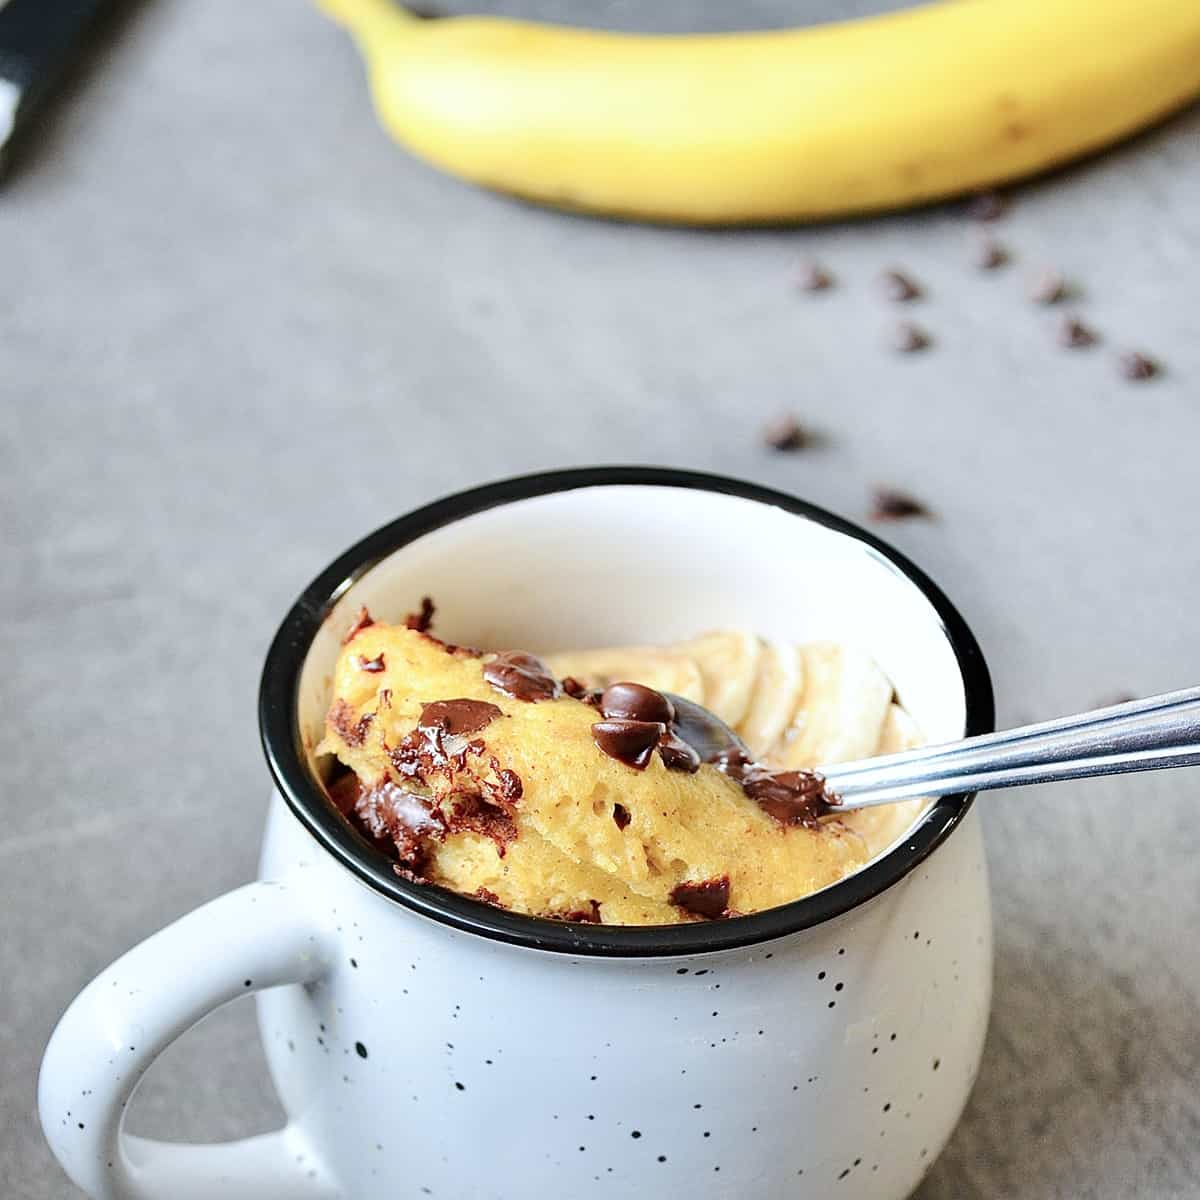 Banana chocolate chip dessert with spoon